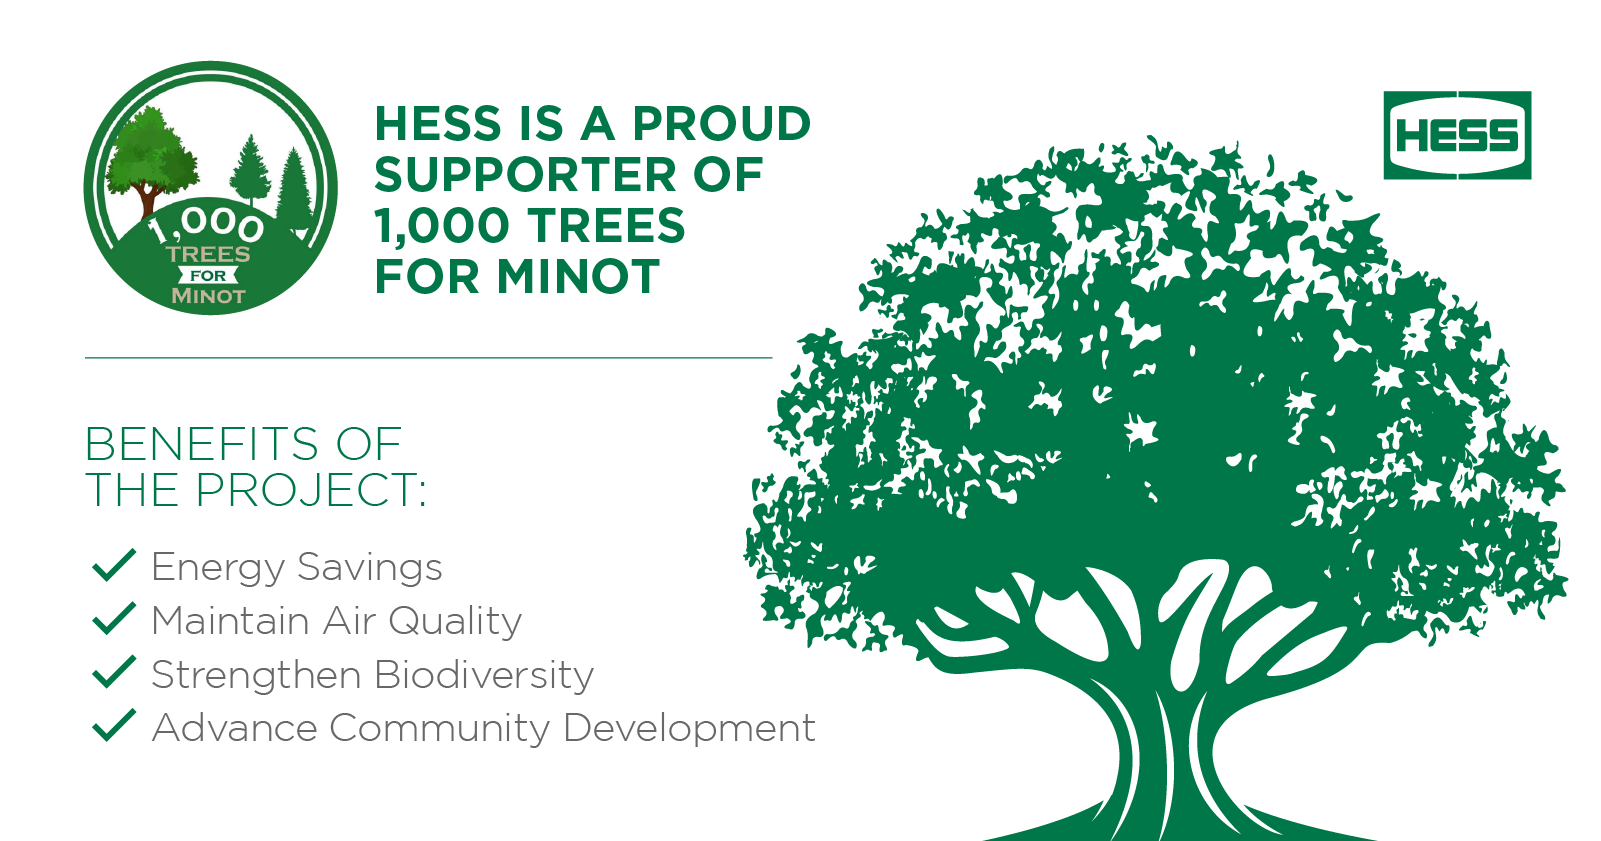 Hess’ Continued Support of Minot, North Dakota